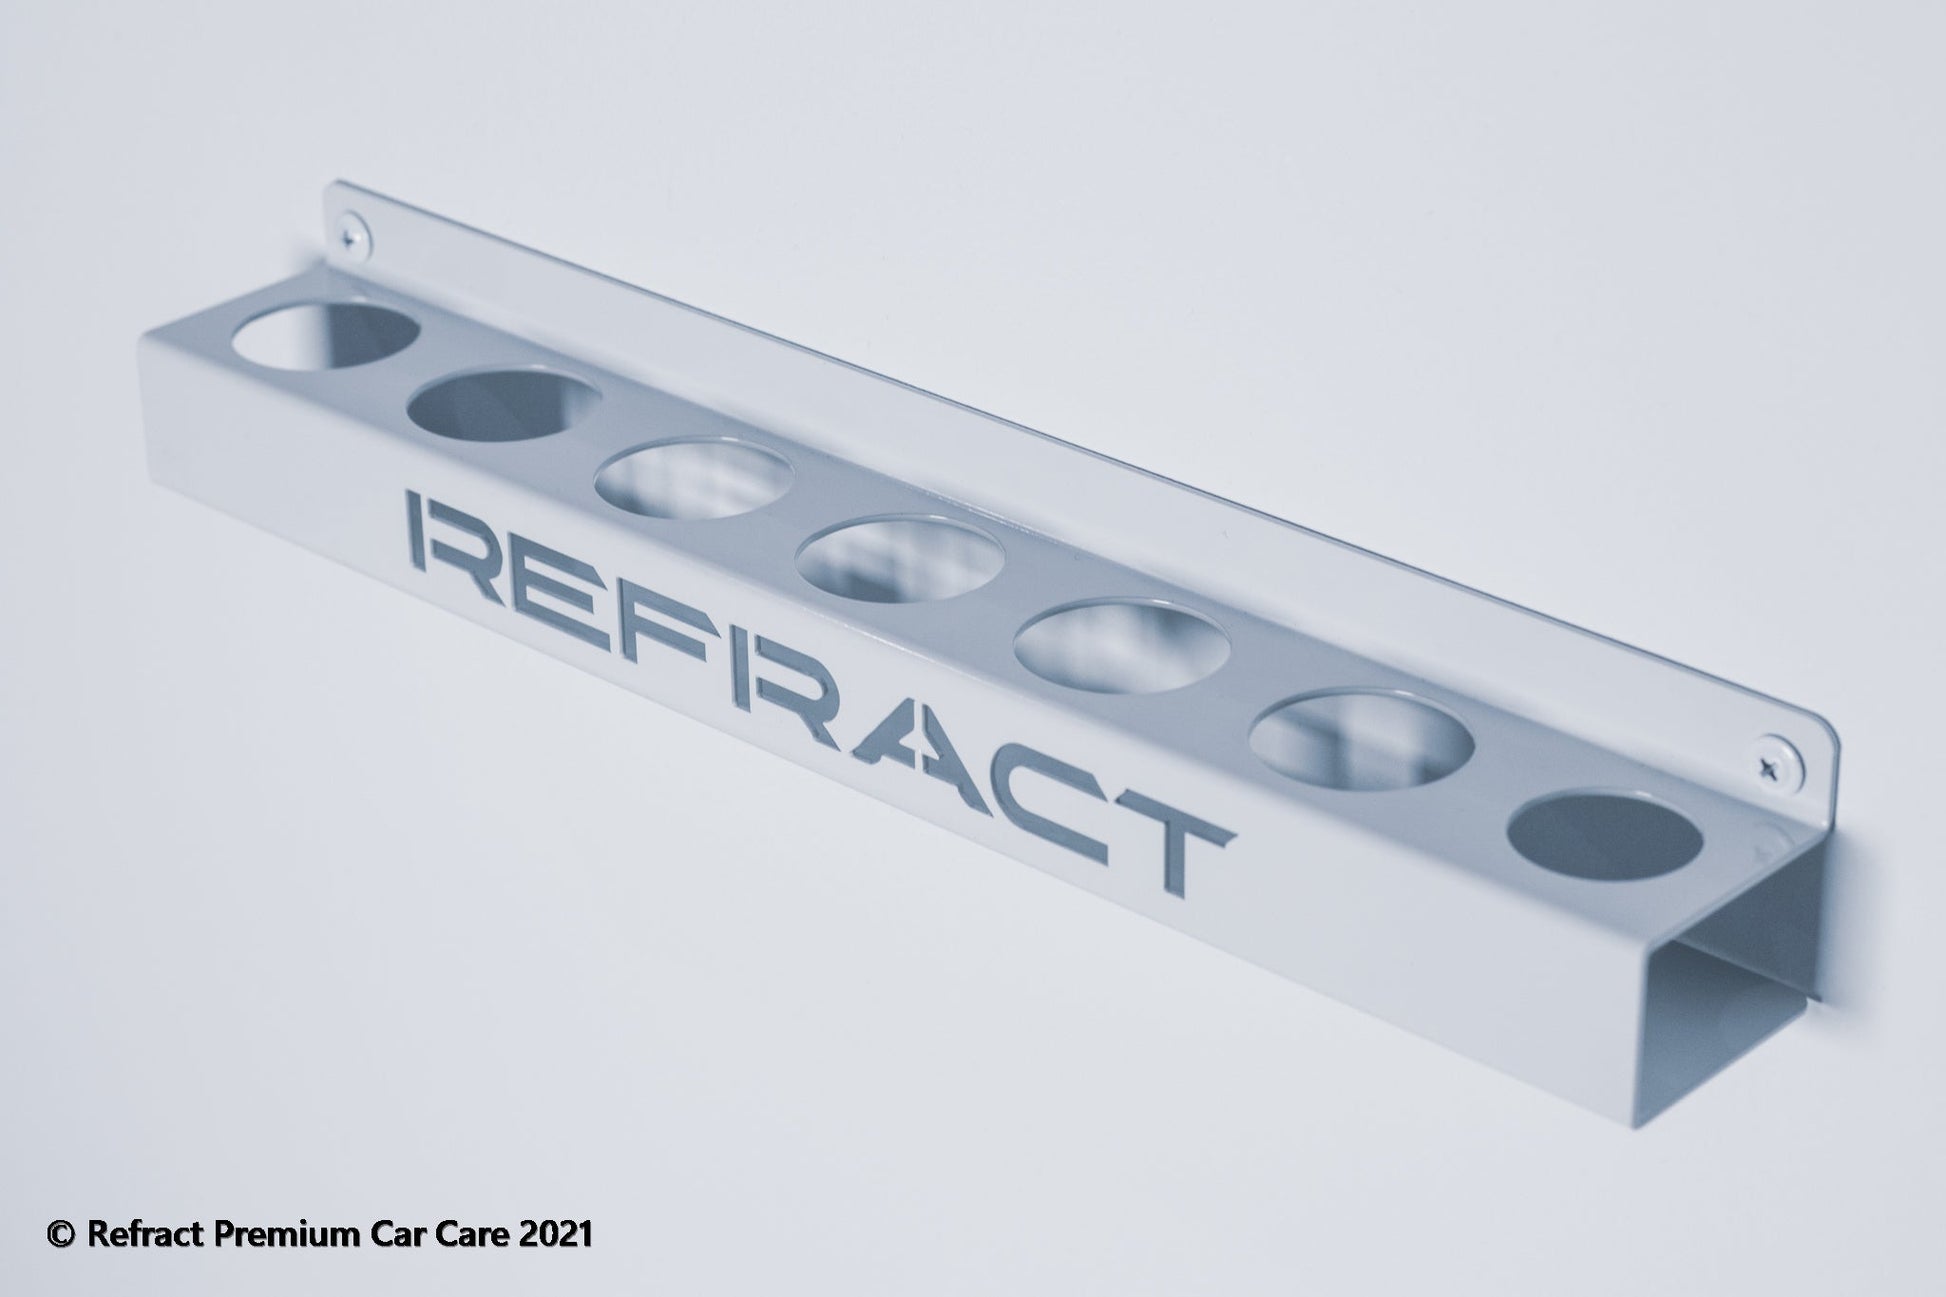 Refract Premium Car Care Products Refract Ceramic Coating Bottle Holder Garage Wall Storage Holder $49.95